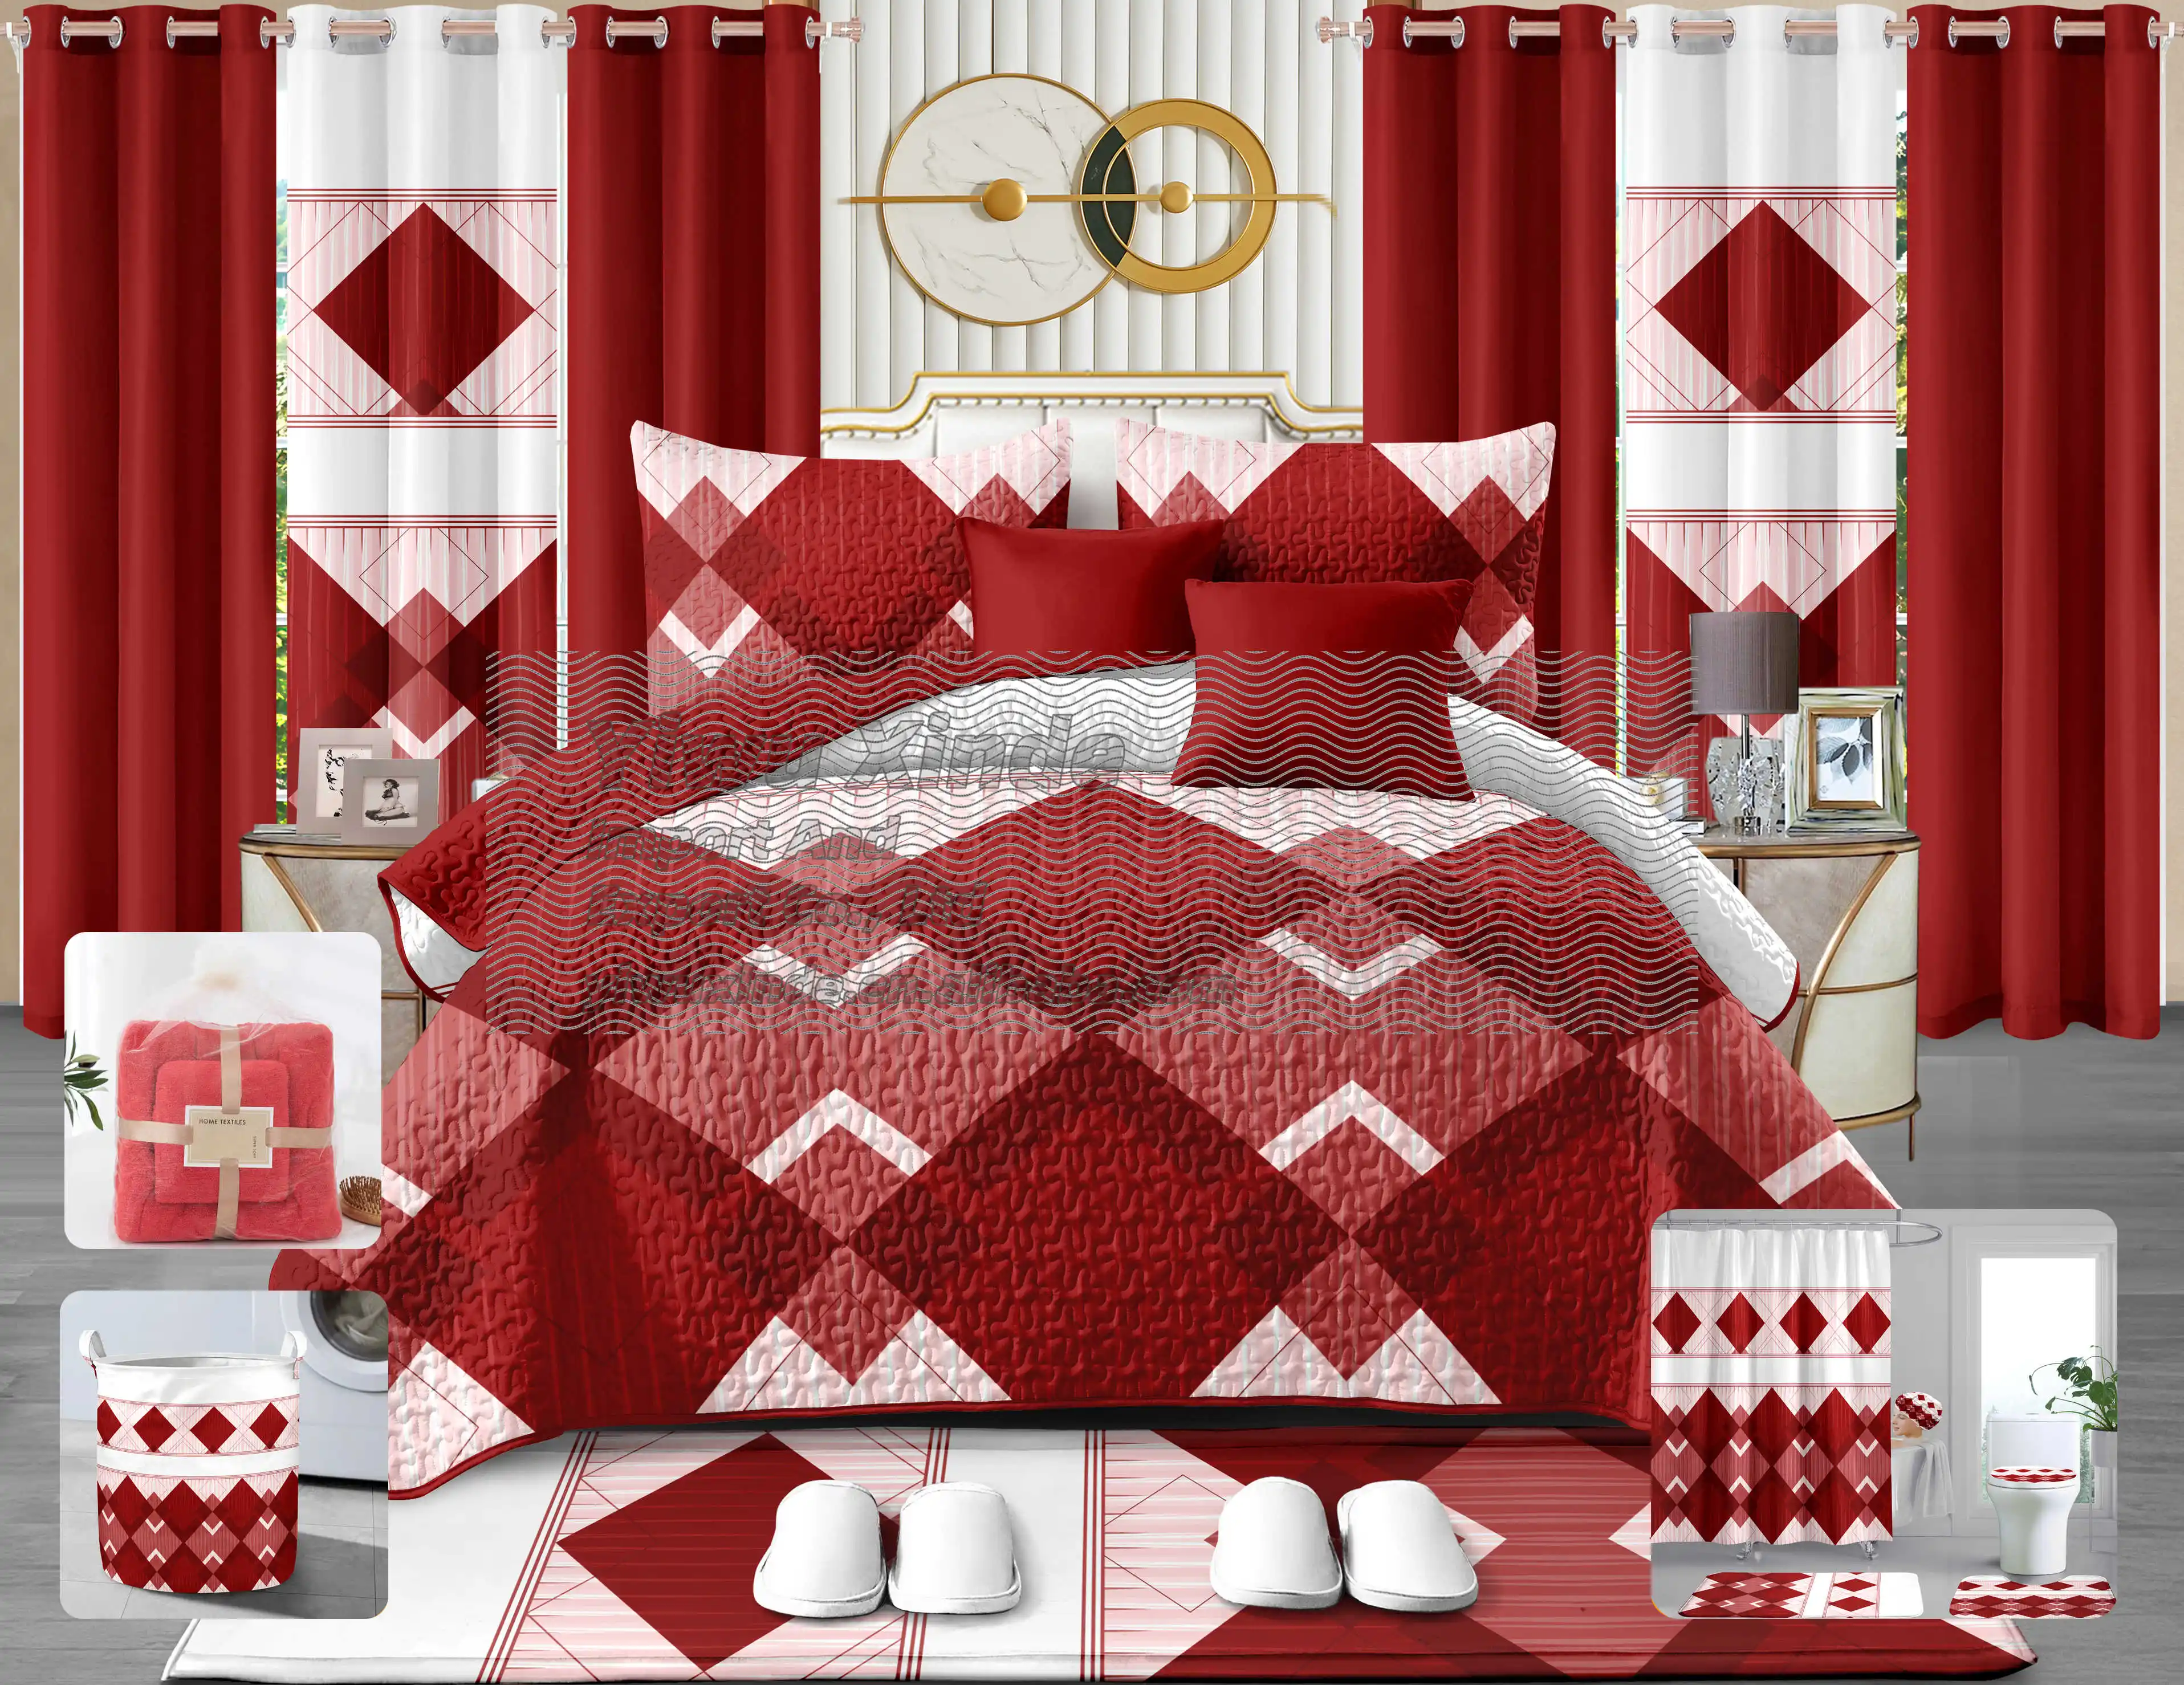 High quality 26pieces bedspread set with curtains king Cobertores de 26 piezas disponibles quilts bedding set and bathroom set